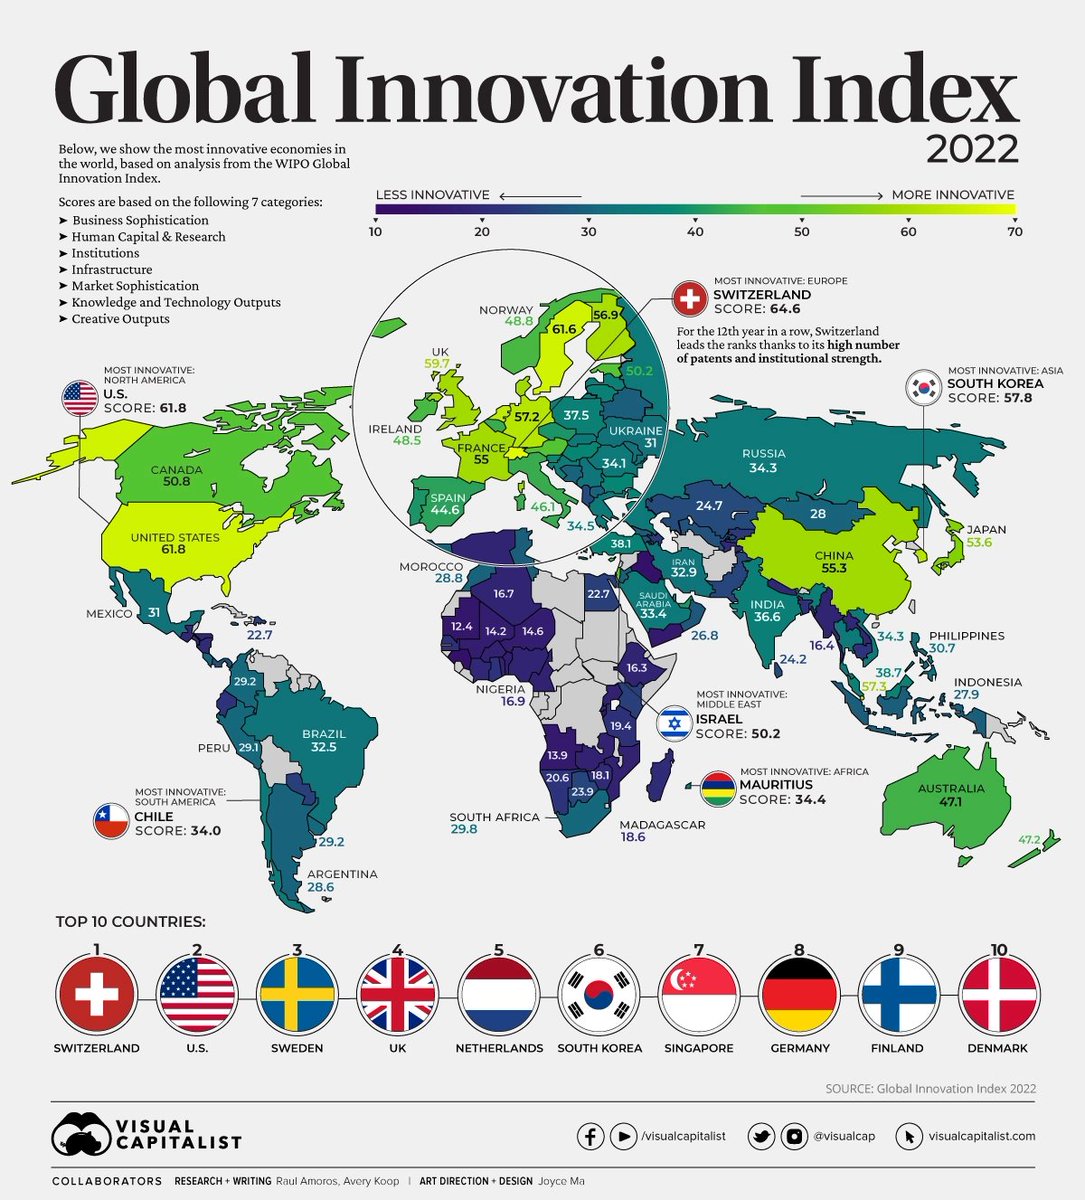 The World's Most #Innovative Countries in 2022 1 #Switzerland 🇨🇭 2 #USA 🇺🇸 3 #Sweden 🇸🇪 4 #UK 🇬🇧 5 #Netherlands 🇳🇱 6 #SouthKorea 🇰🇷 7 #Singapore 🇸🇬 8 #Japan 🇯🇵 bit.ly/3jcZHnC via @VisualCap @chboursin @Shi4Tec @enilev @mvollmer1 @RagusoSergio @AkwyZ @efipm @kalydeoo